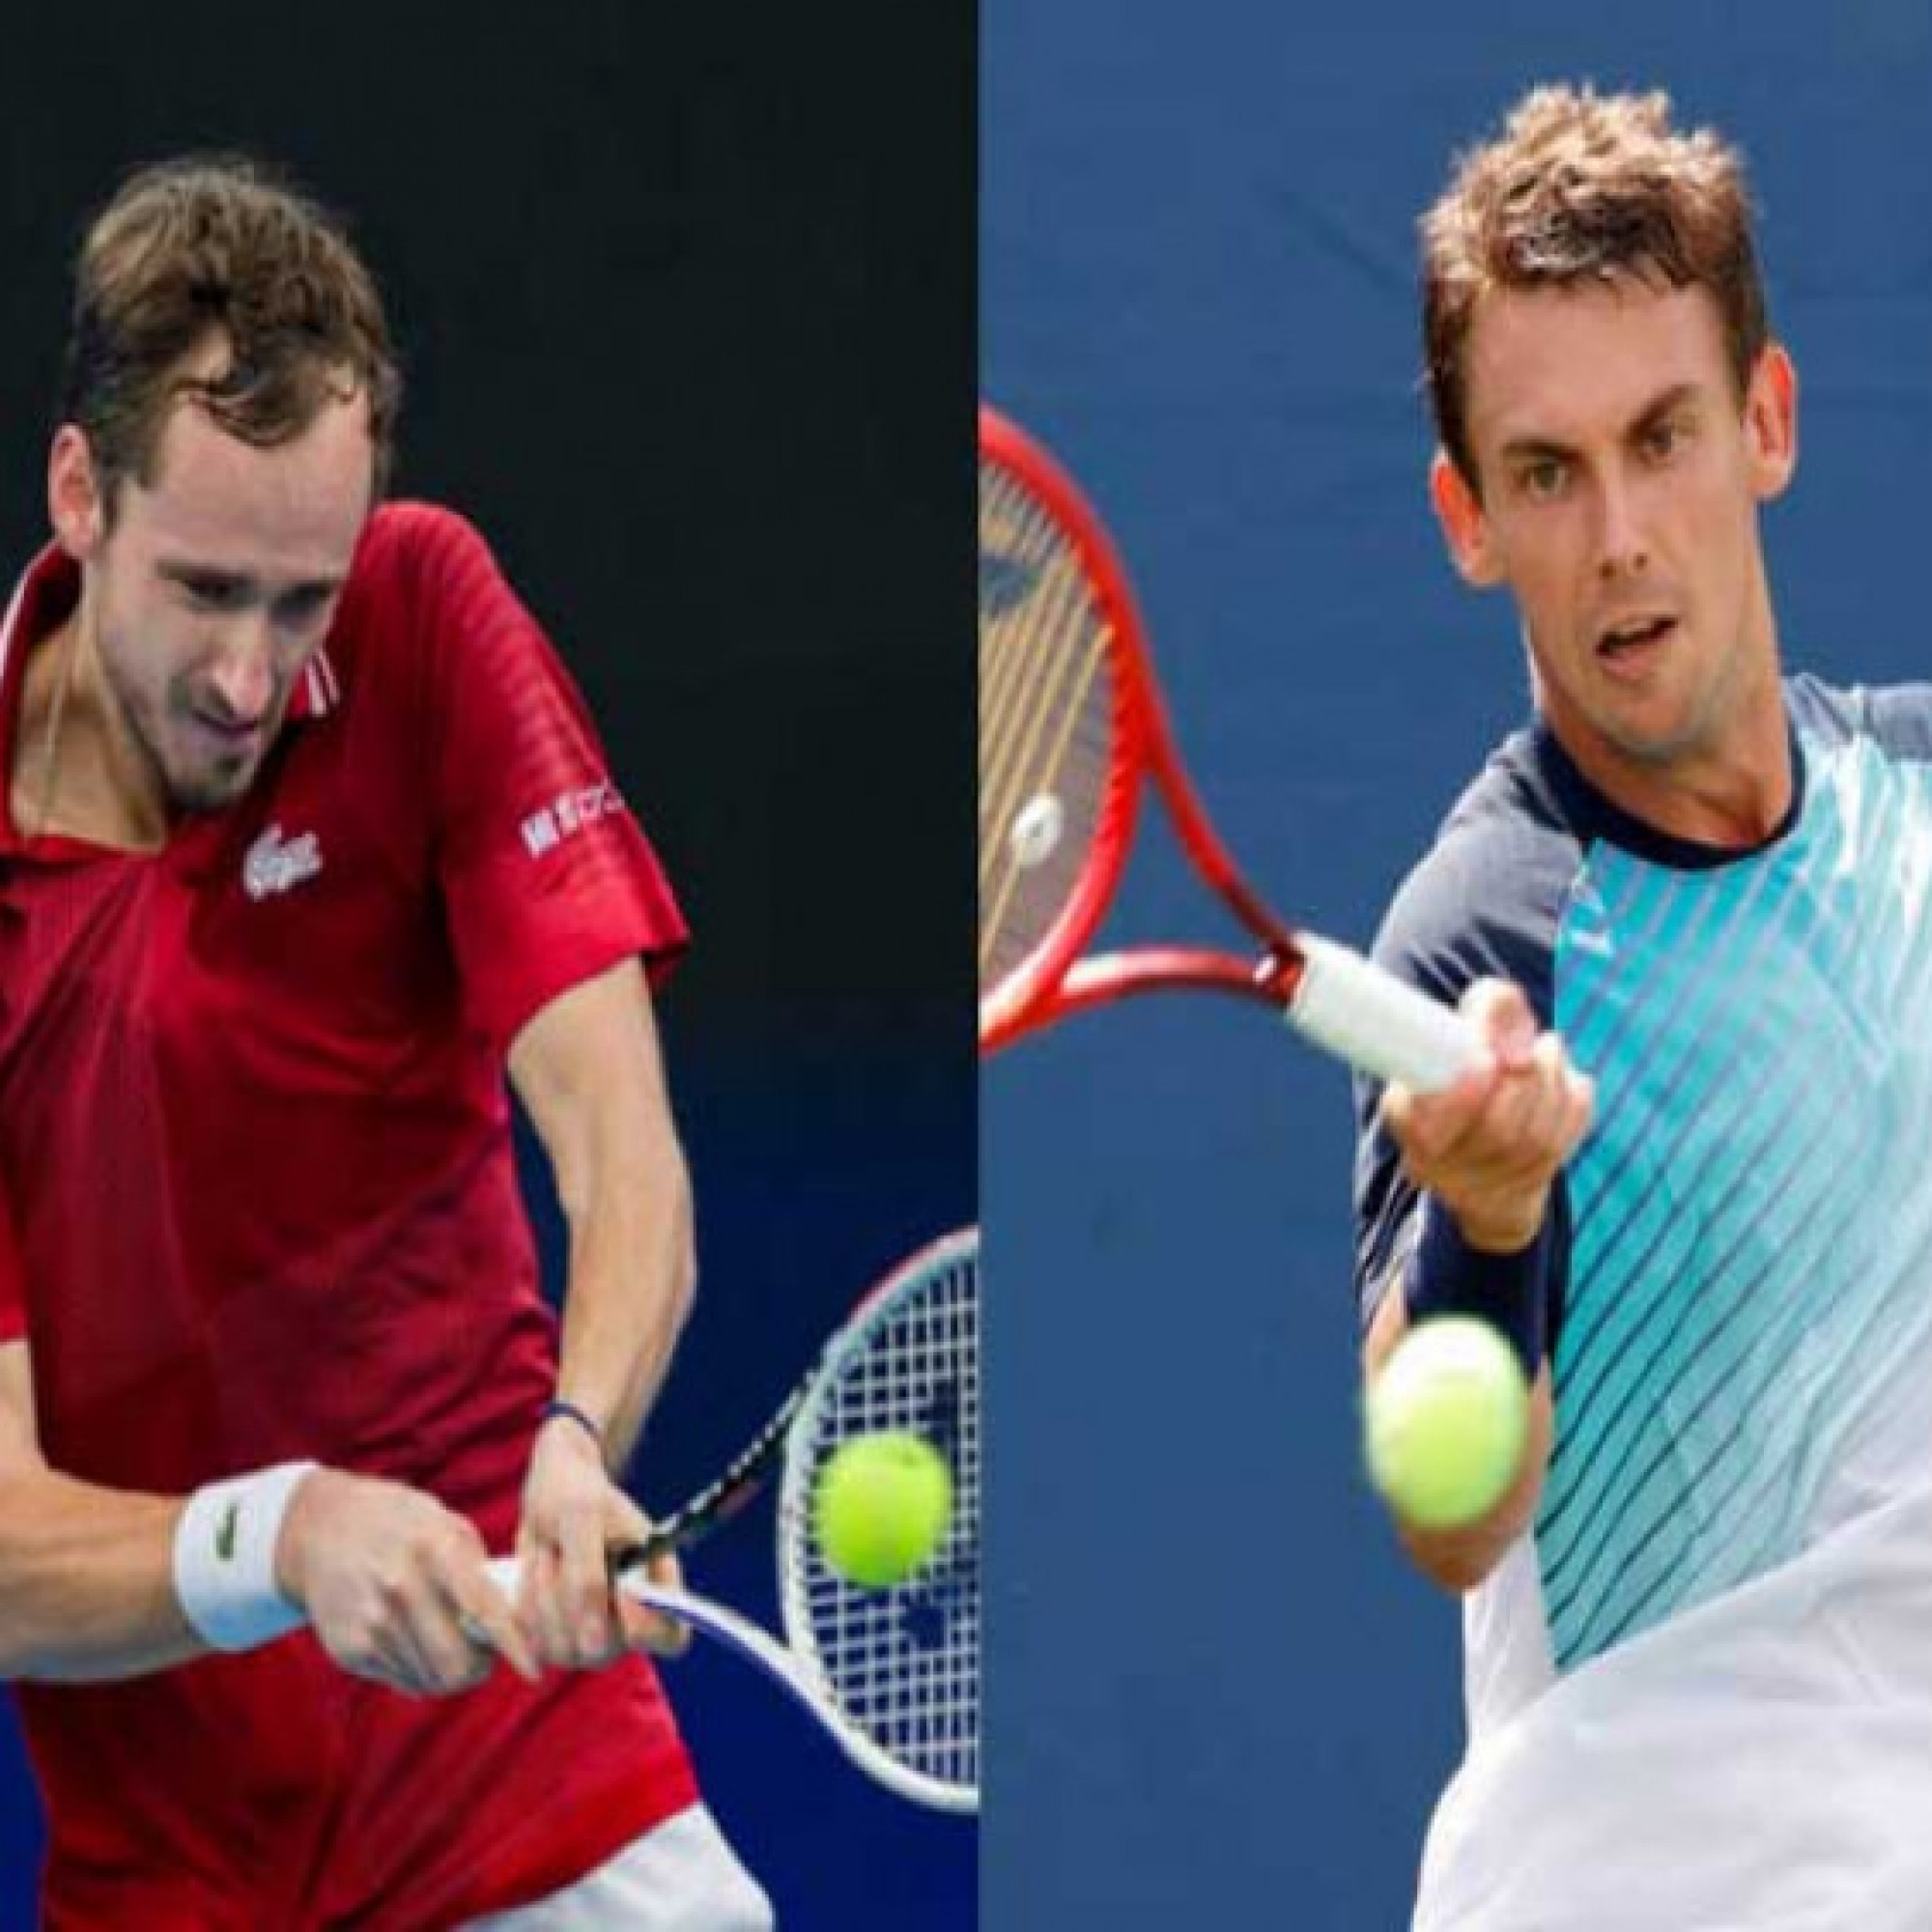  - Trực tiếp tennis Laaksonen - Medvedev: Chờ ra quân thắng lợi (Vòng 1 Australian Open)